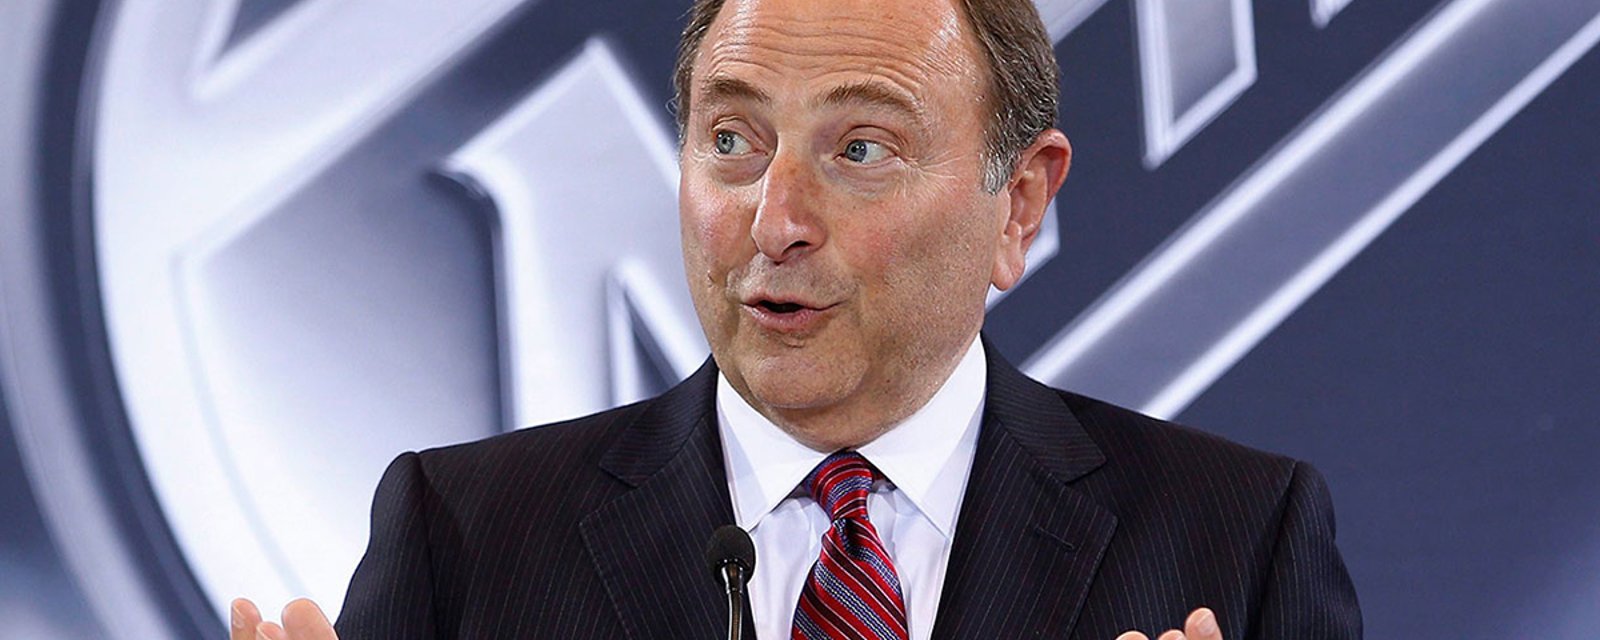 Breaking: Bettman announces HUGE increase in NHL salary cap for 2019-20